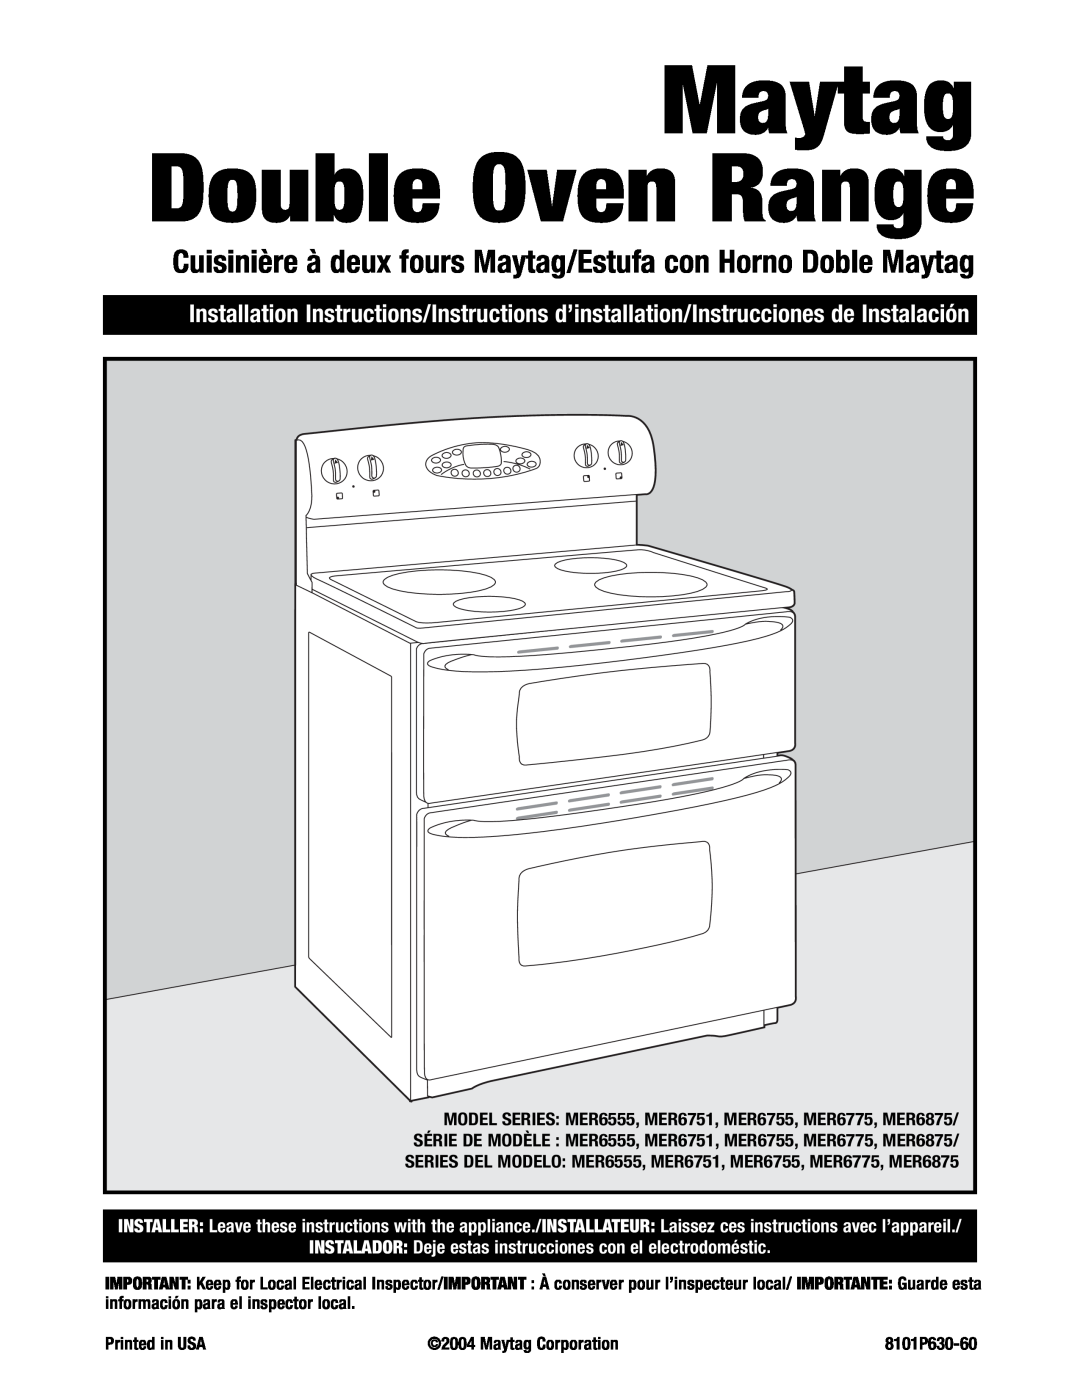 Maytag MER6775, MER6751, MER6875, MER6555, MER6755 installation instructions Maytag Double Oven Range 